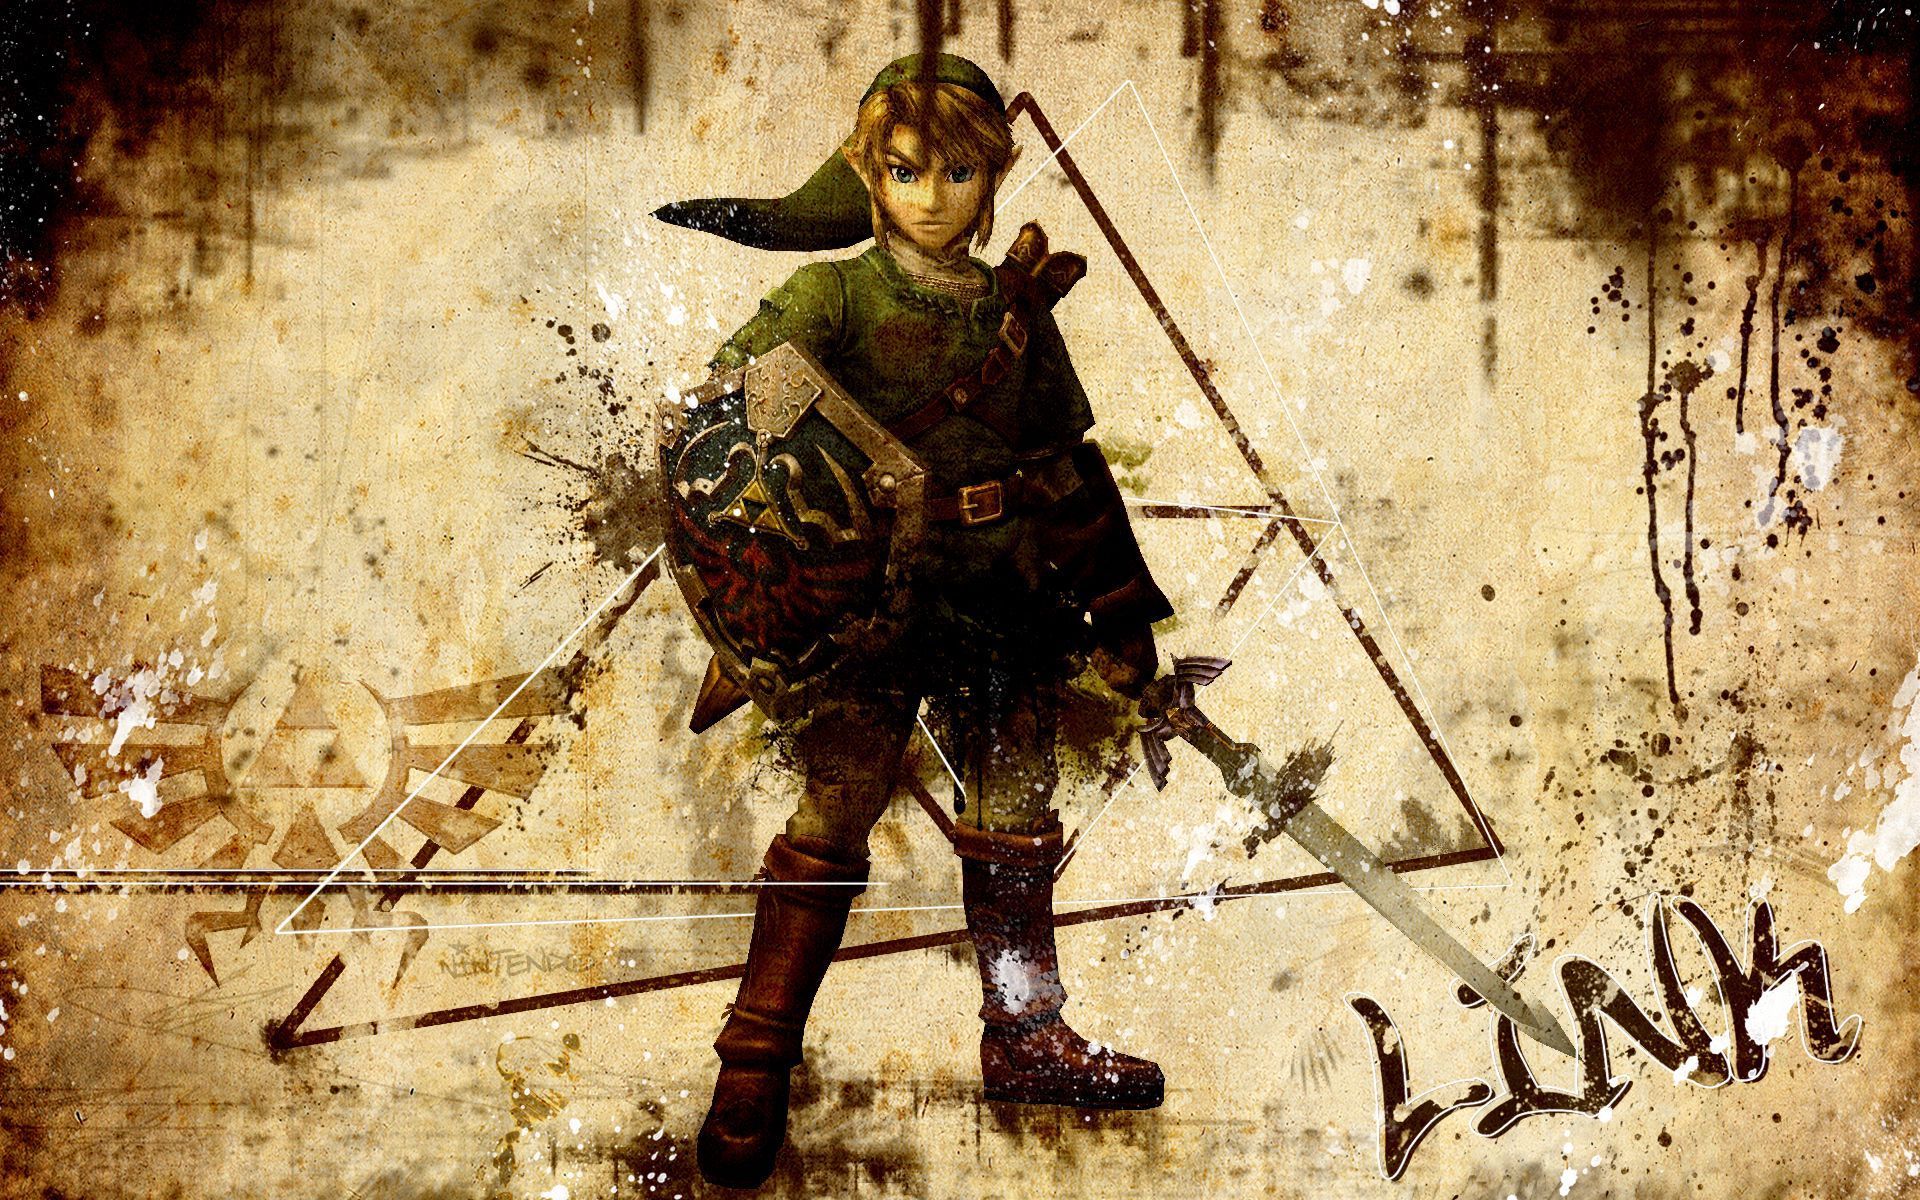 Link - The Legend of Zelda Wallpaper (2833139) - Fanpop